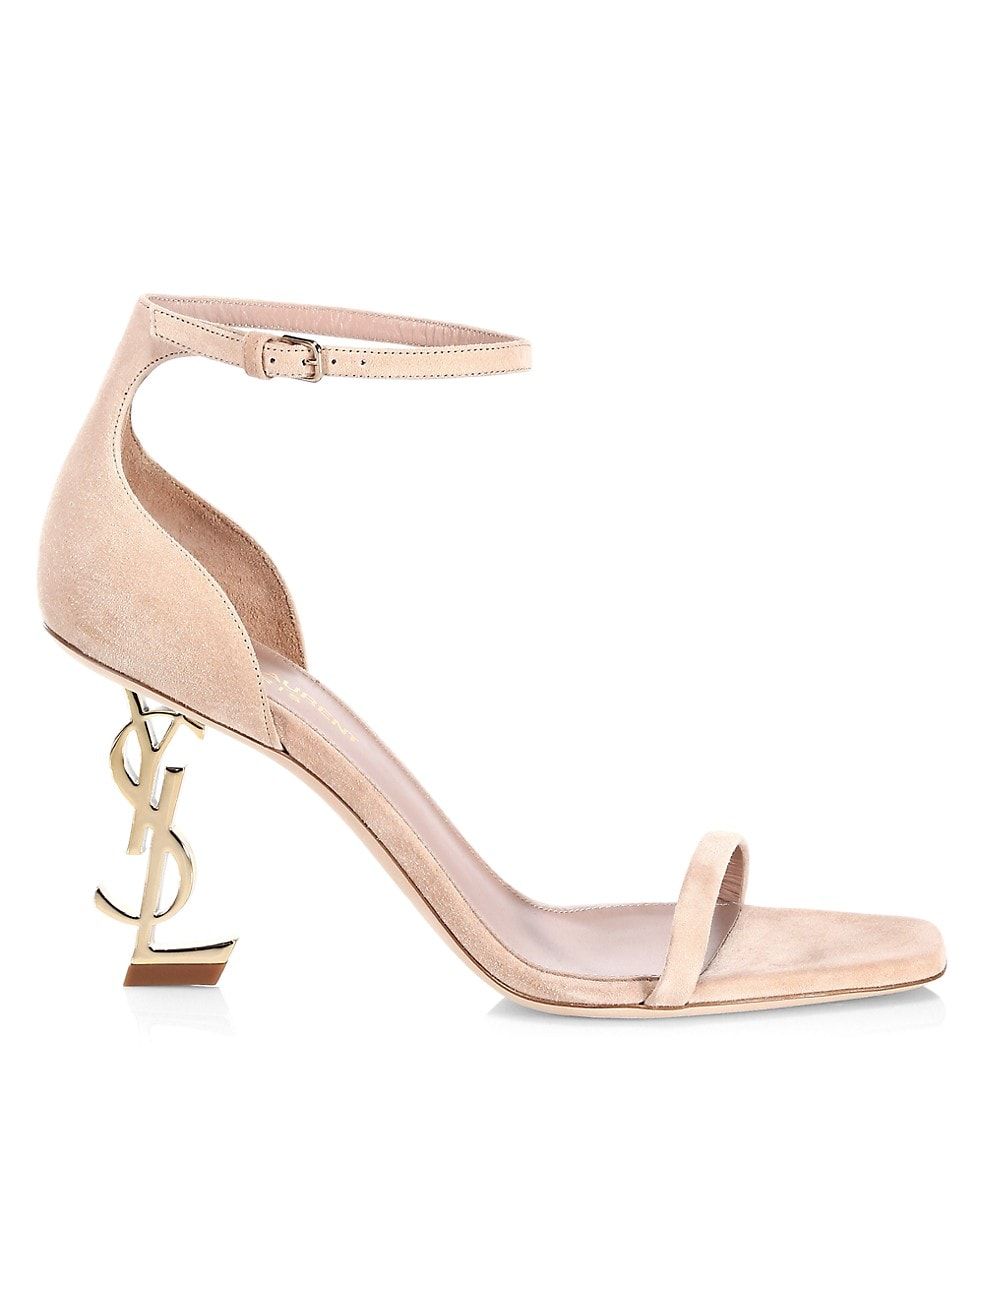 Saint Laurent Opyum Suede Sandals | Saks Fifth Avenue